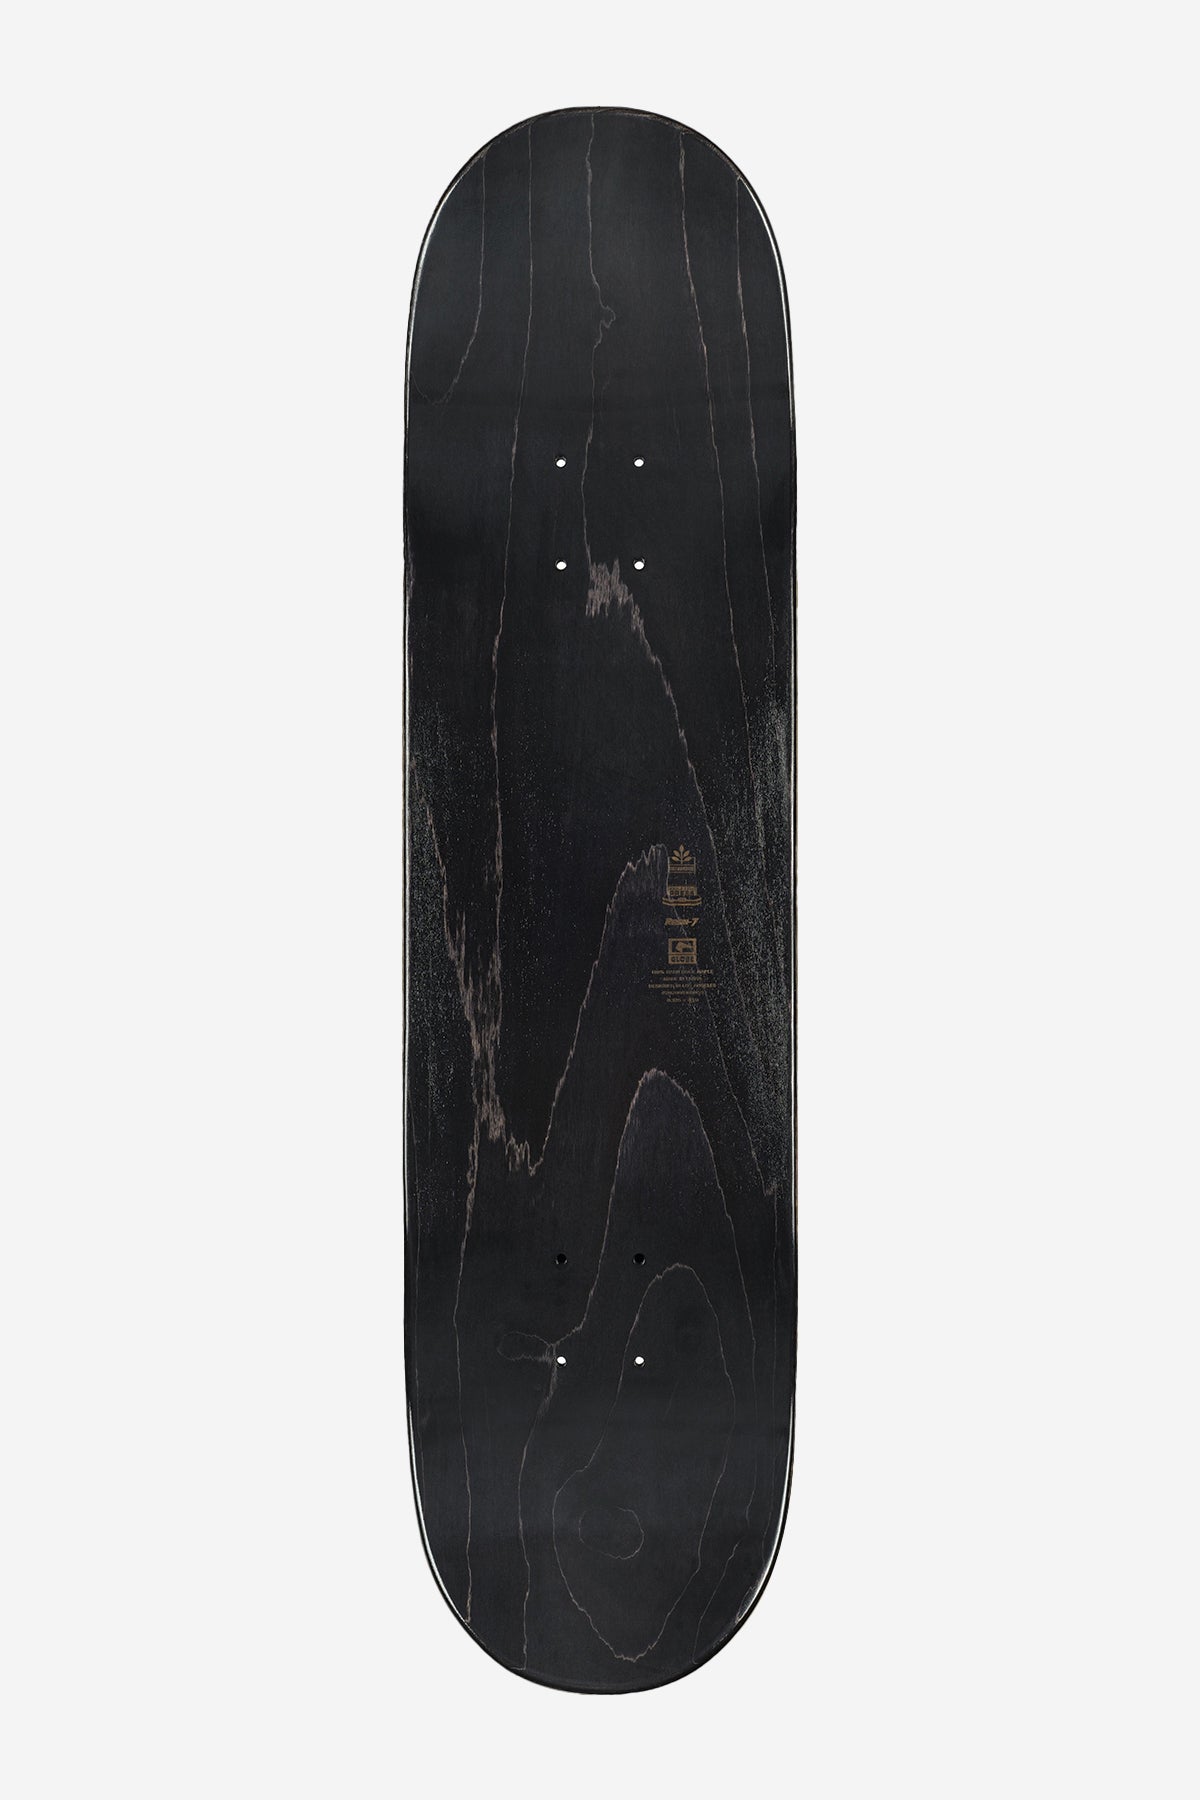 g1 argo black camo 8.125" skateboard deck